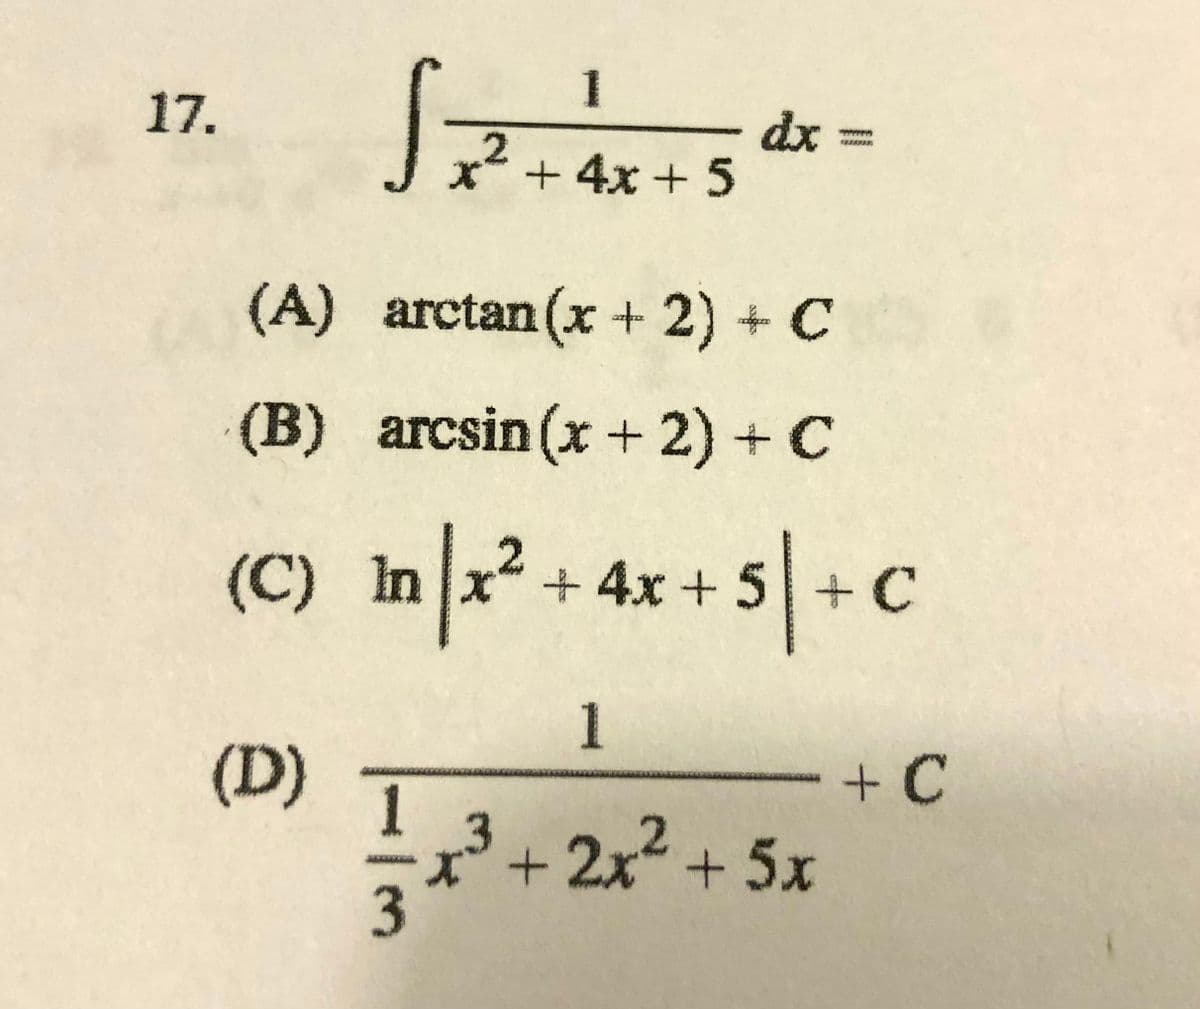 1
17.
dx =
x²+4x +5
(A) arctan (x + 2) + C
(B) arcsin (x+ 2) + C
In |a² + 4x + s| » c
+4x+5
1
+ C
3+2x² + 5x
(D)
1/3
